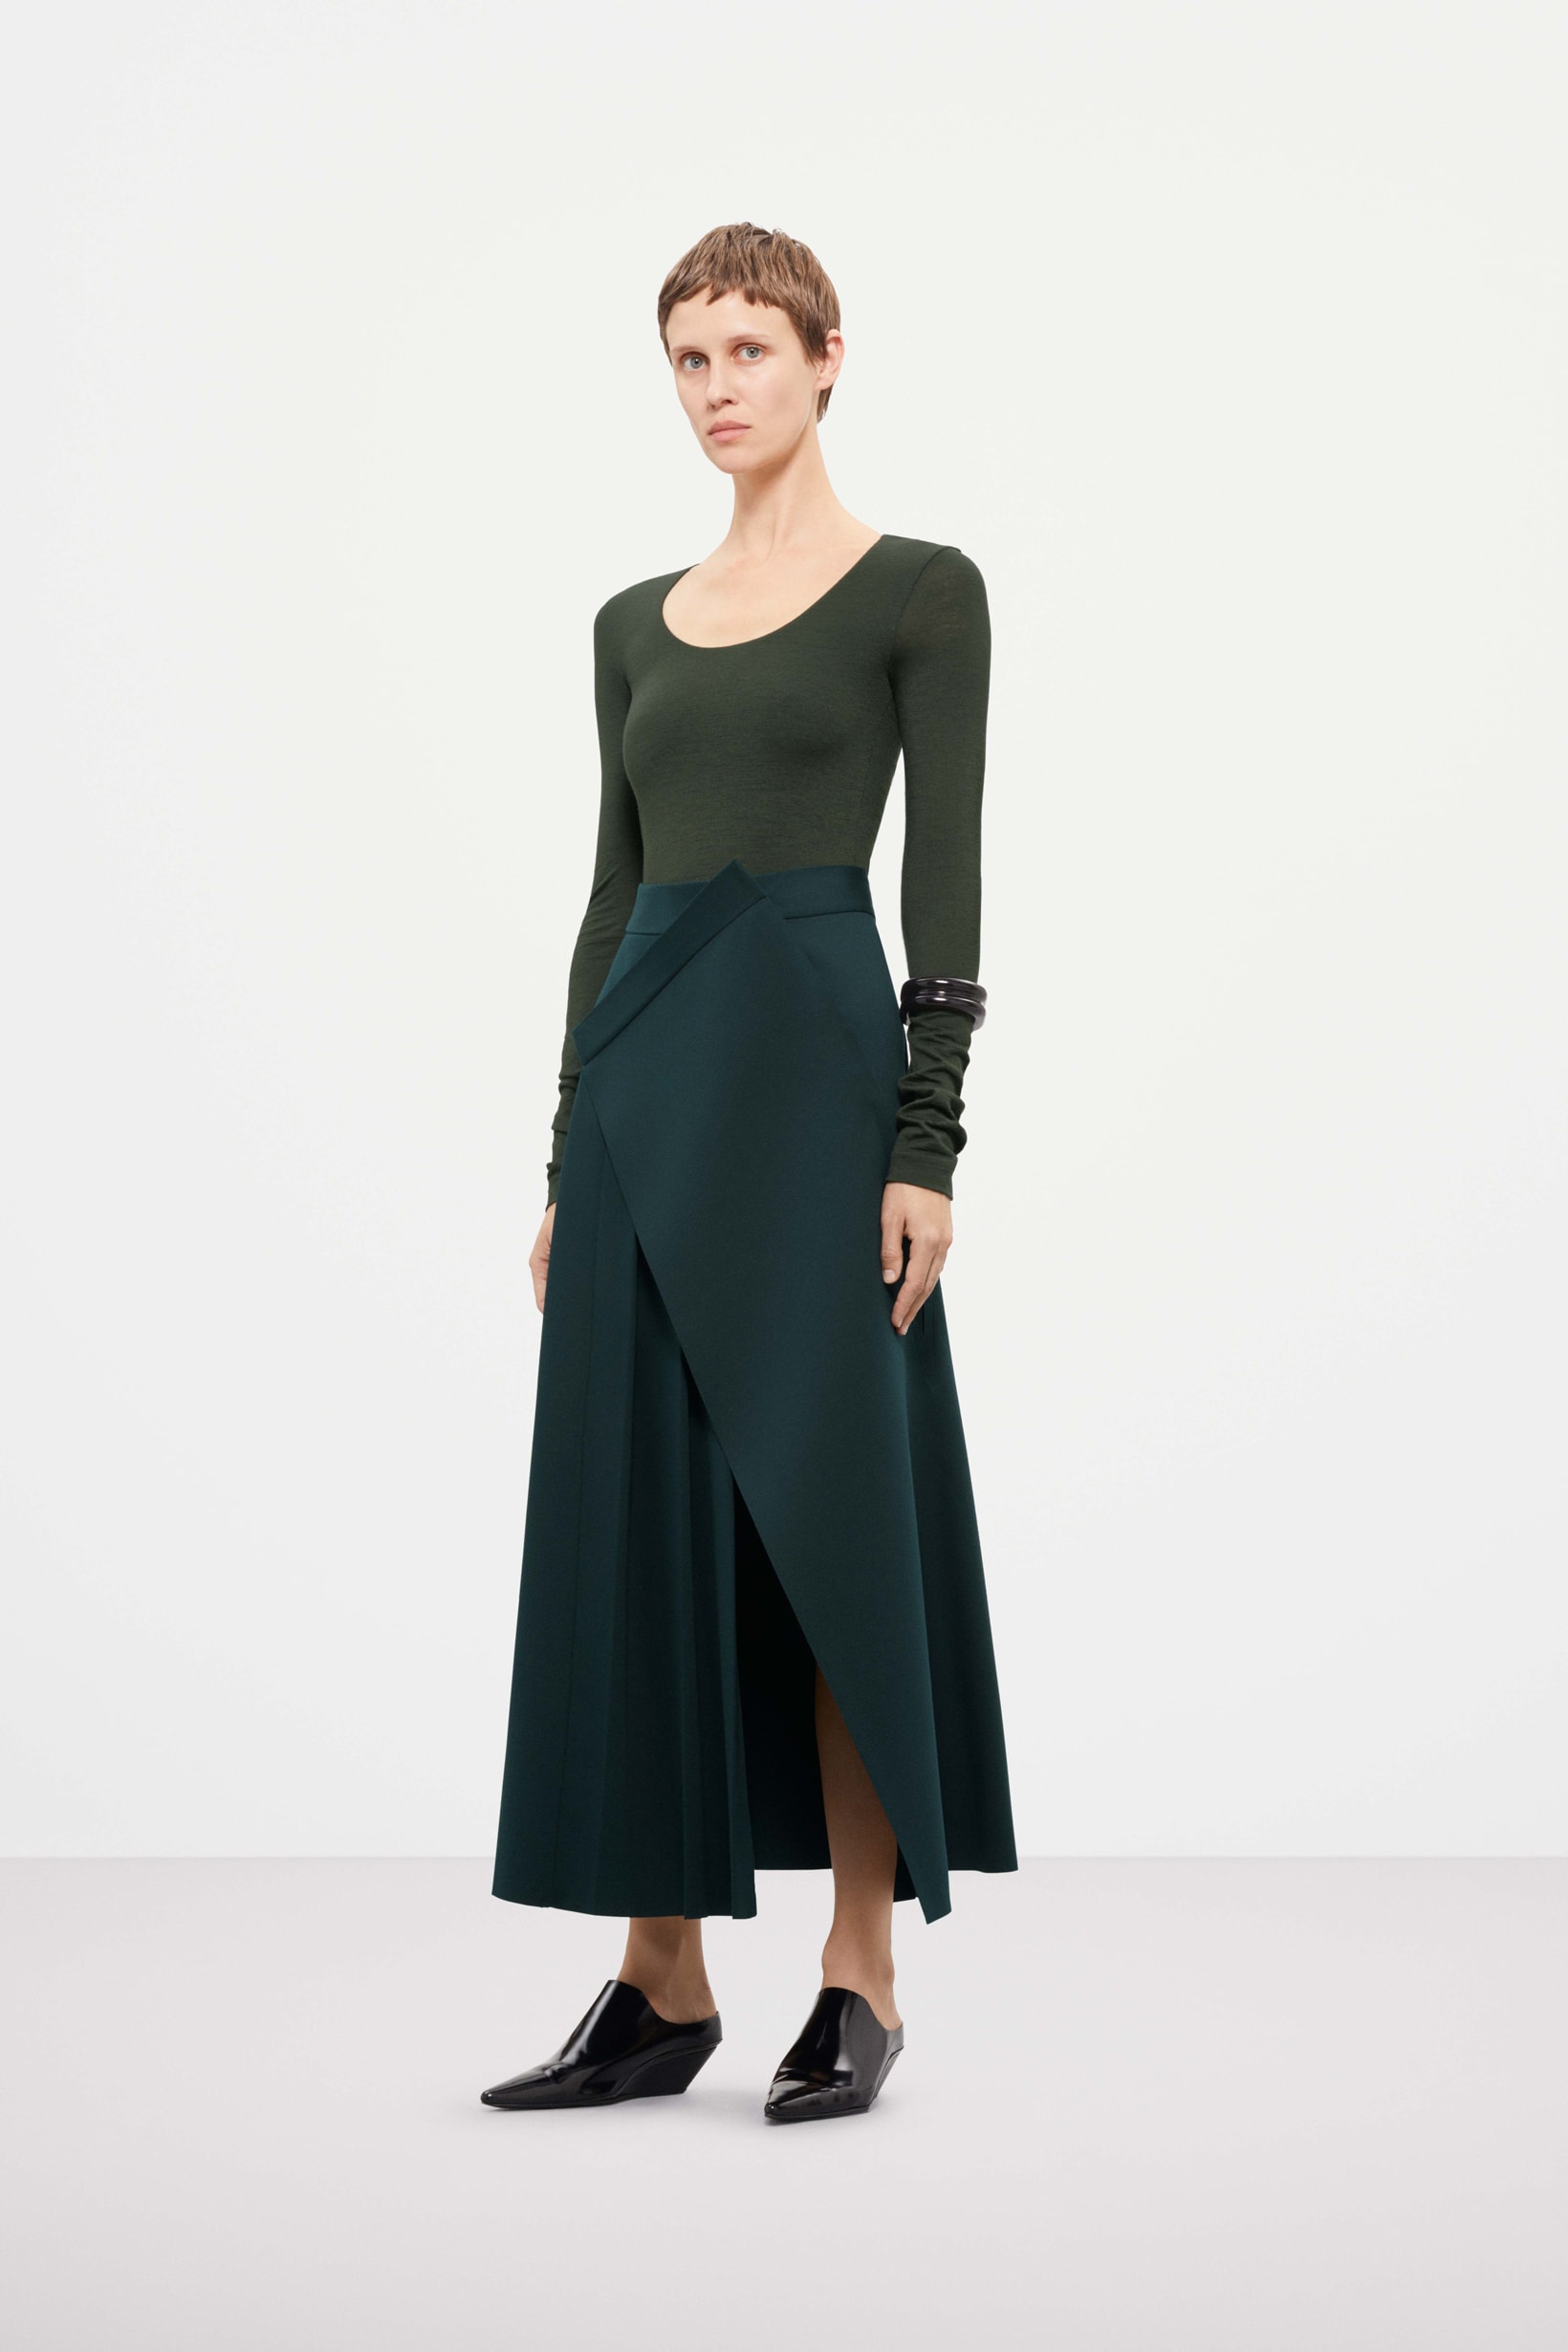 Cos Fall Winter 2019 Lookbook Top Black Skirt Green